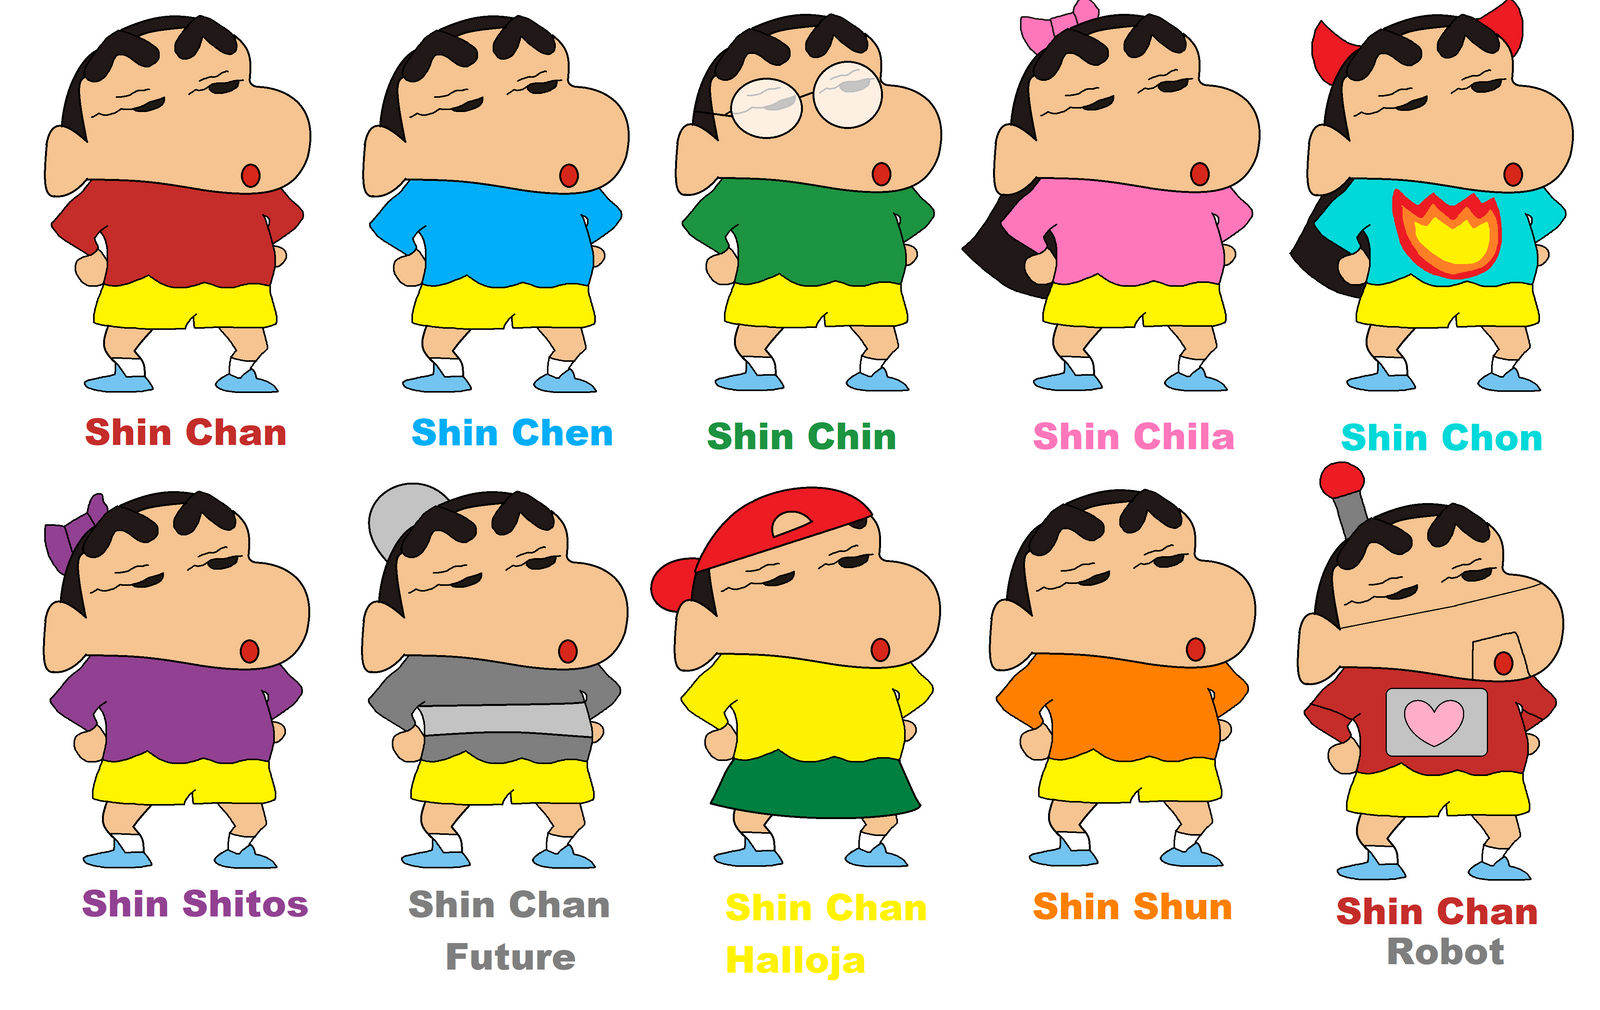 Shin Chan's Coisins by Michaeltoon on DeviantArt